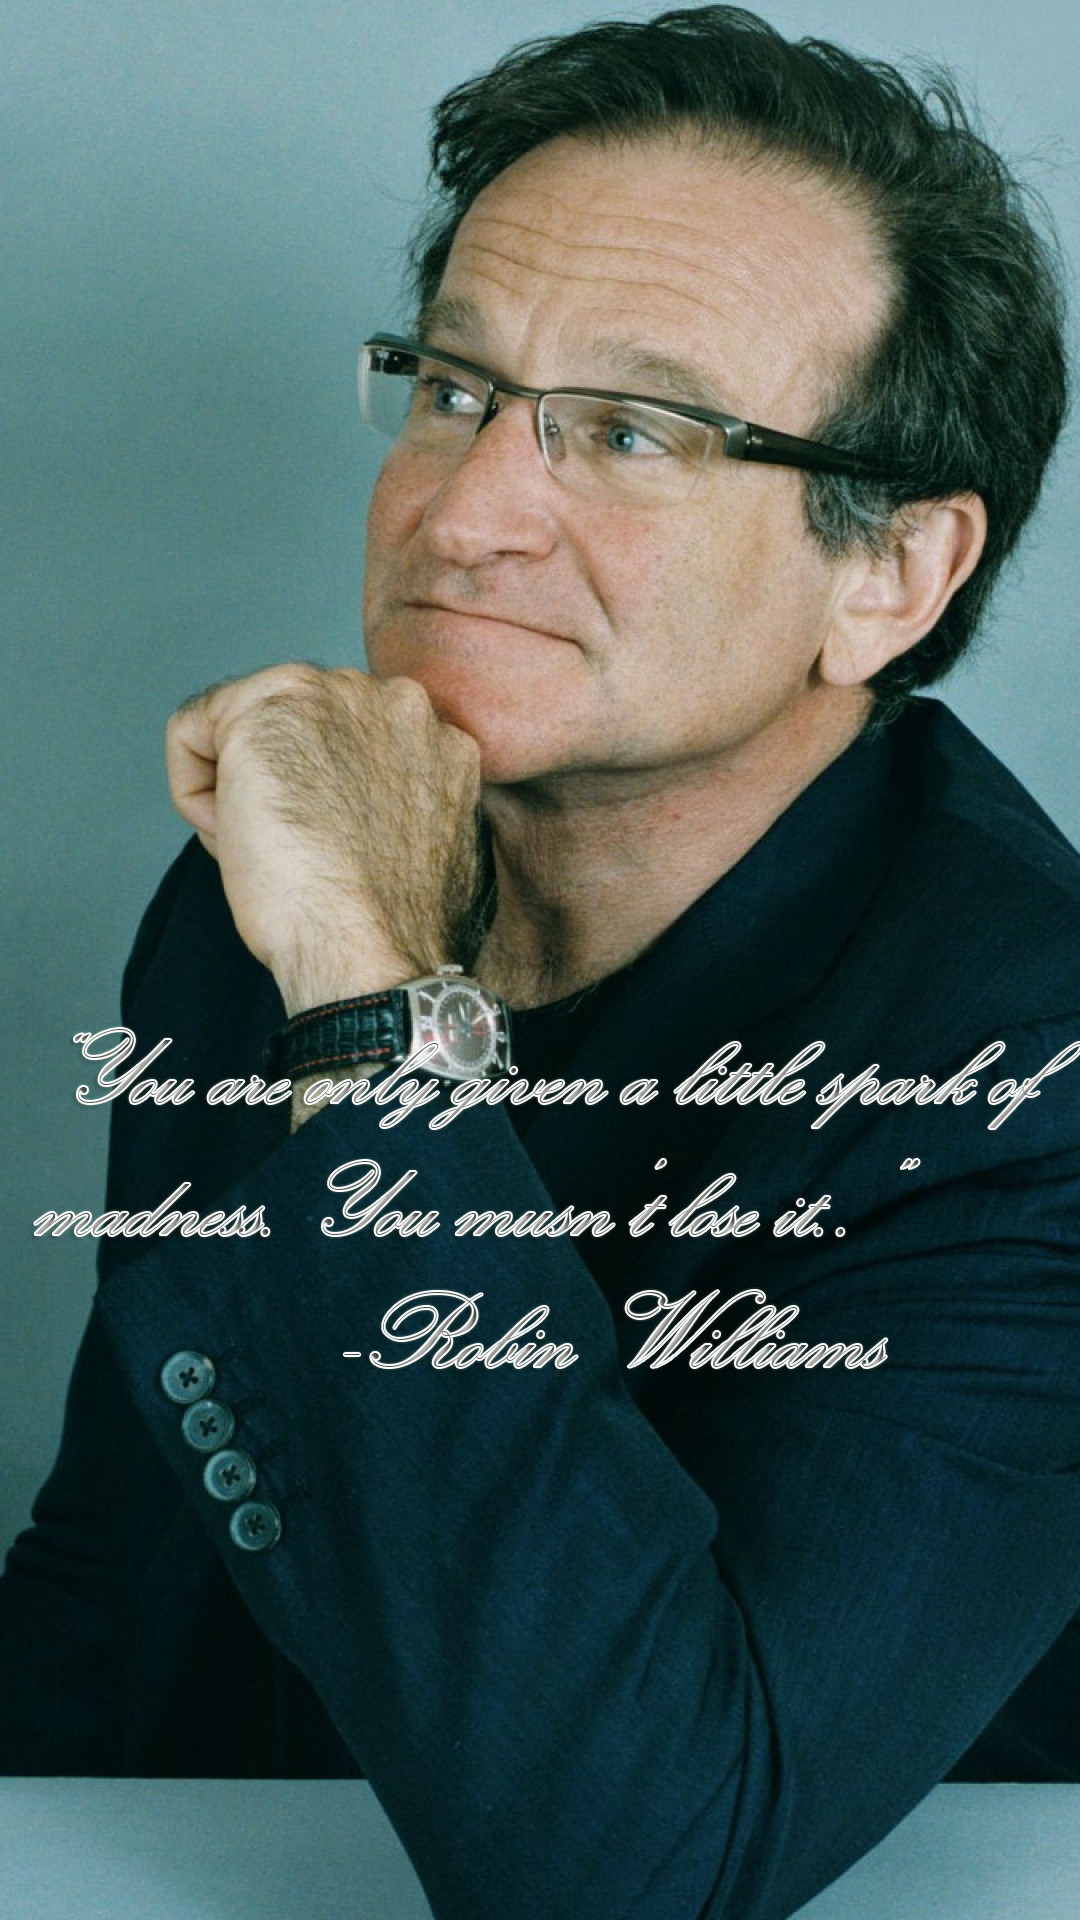 Robin Williams Wallpaper Iphone - 1080x1920 Wallpaper 